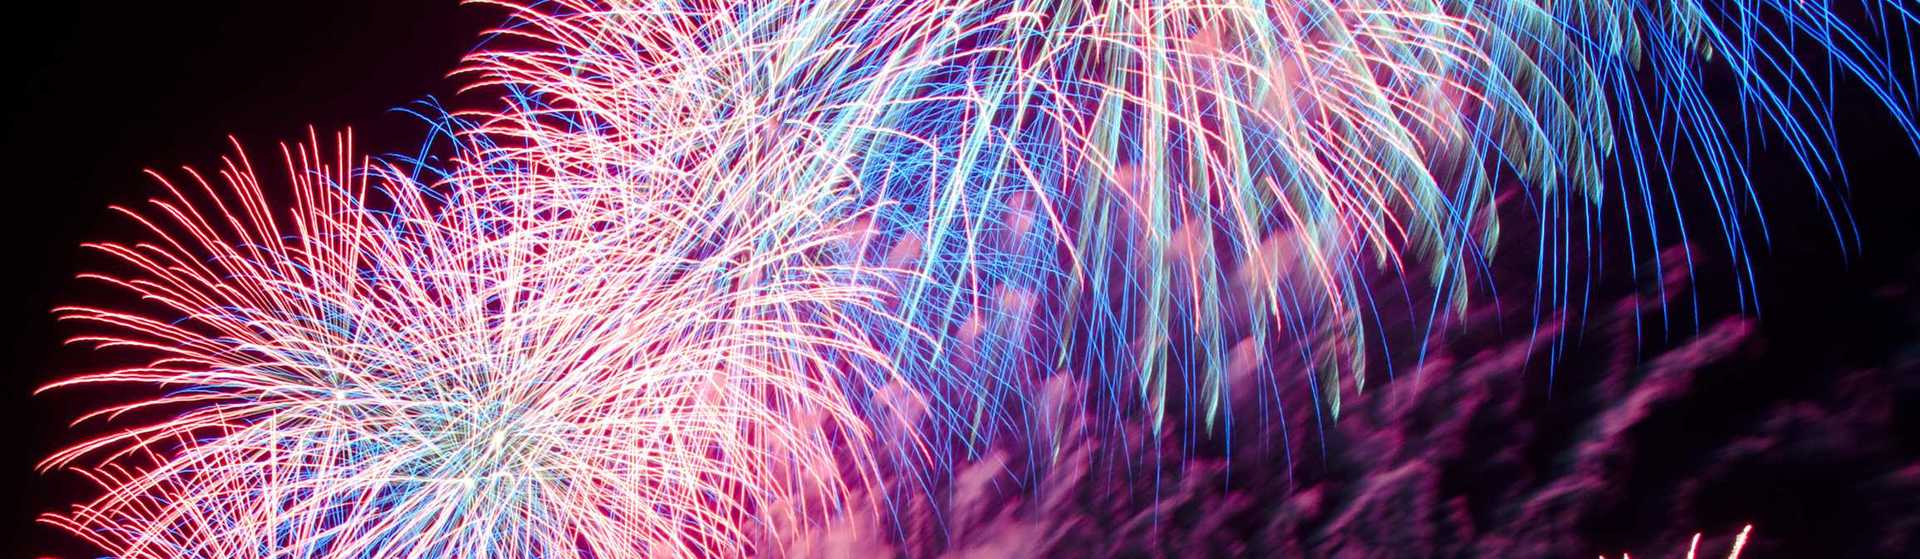 Wedding Fireworks | KCs Fireworks Displays Qld & NSW